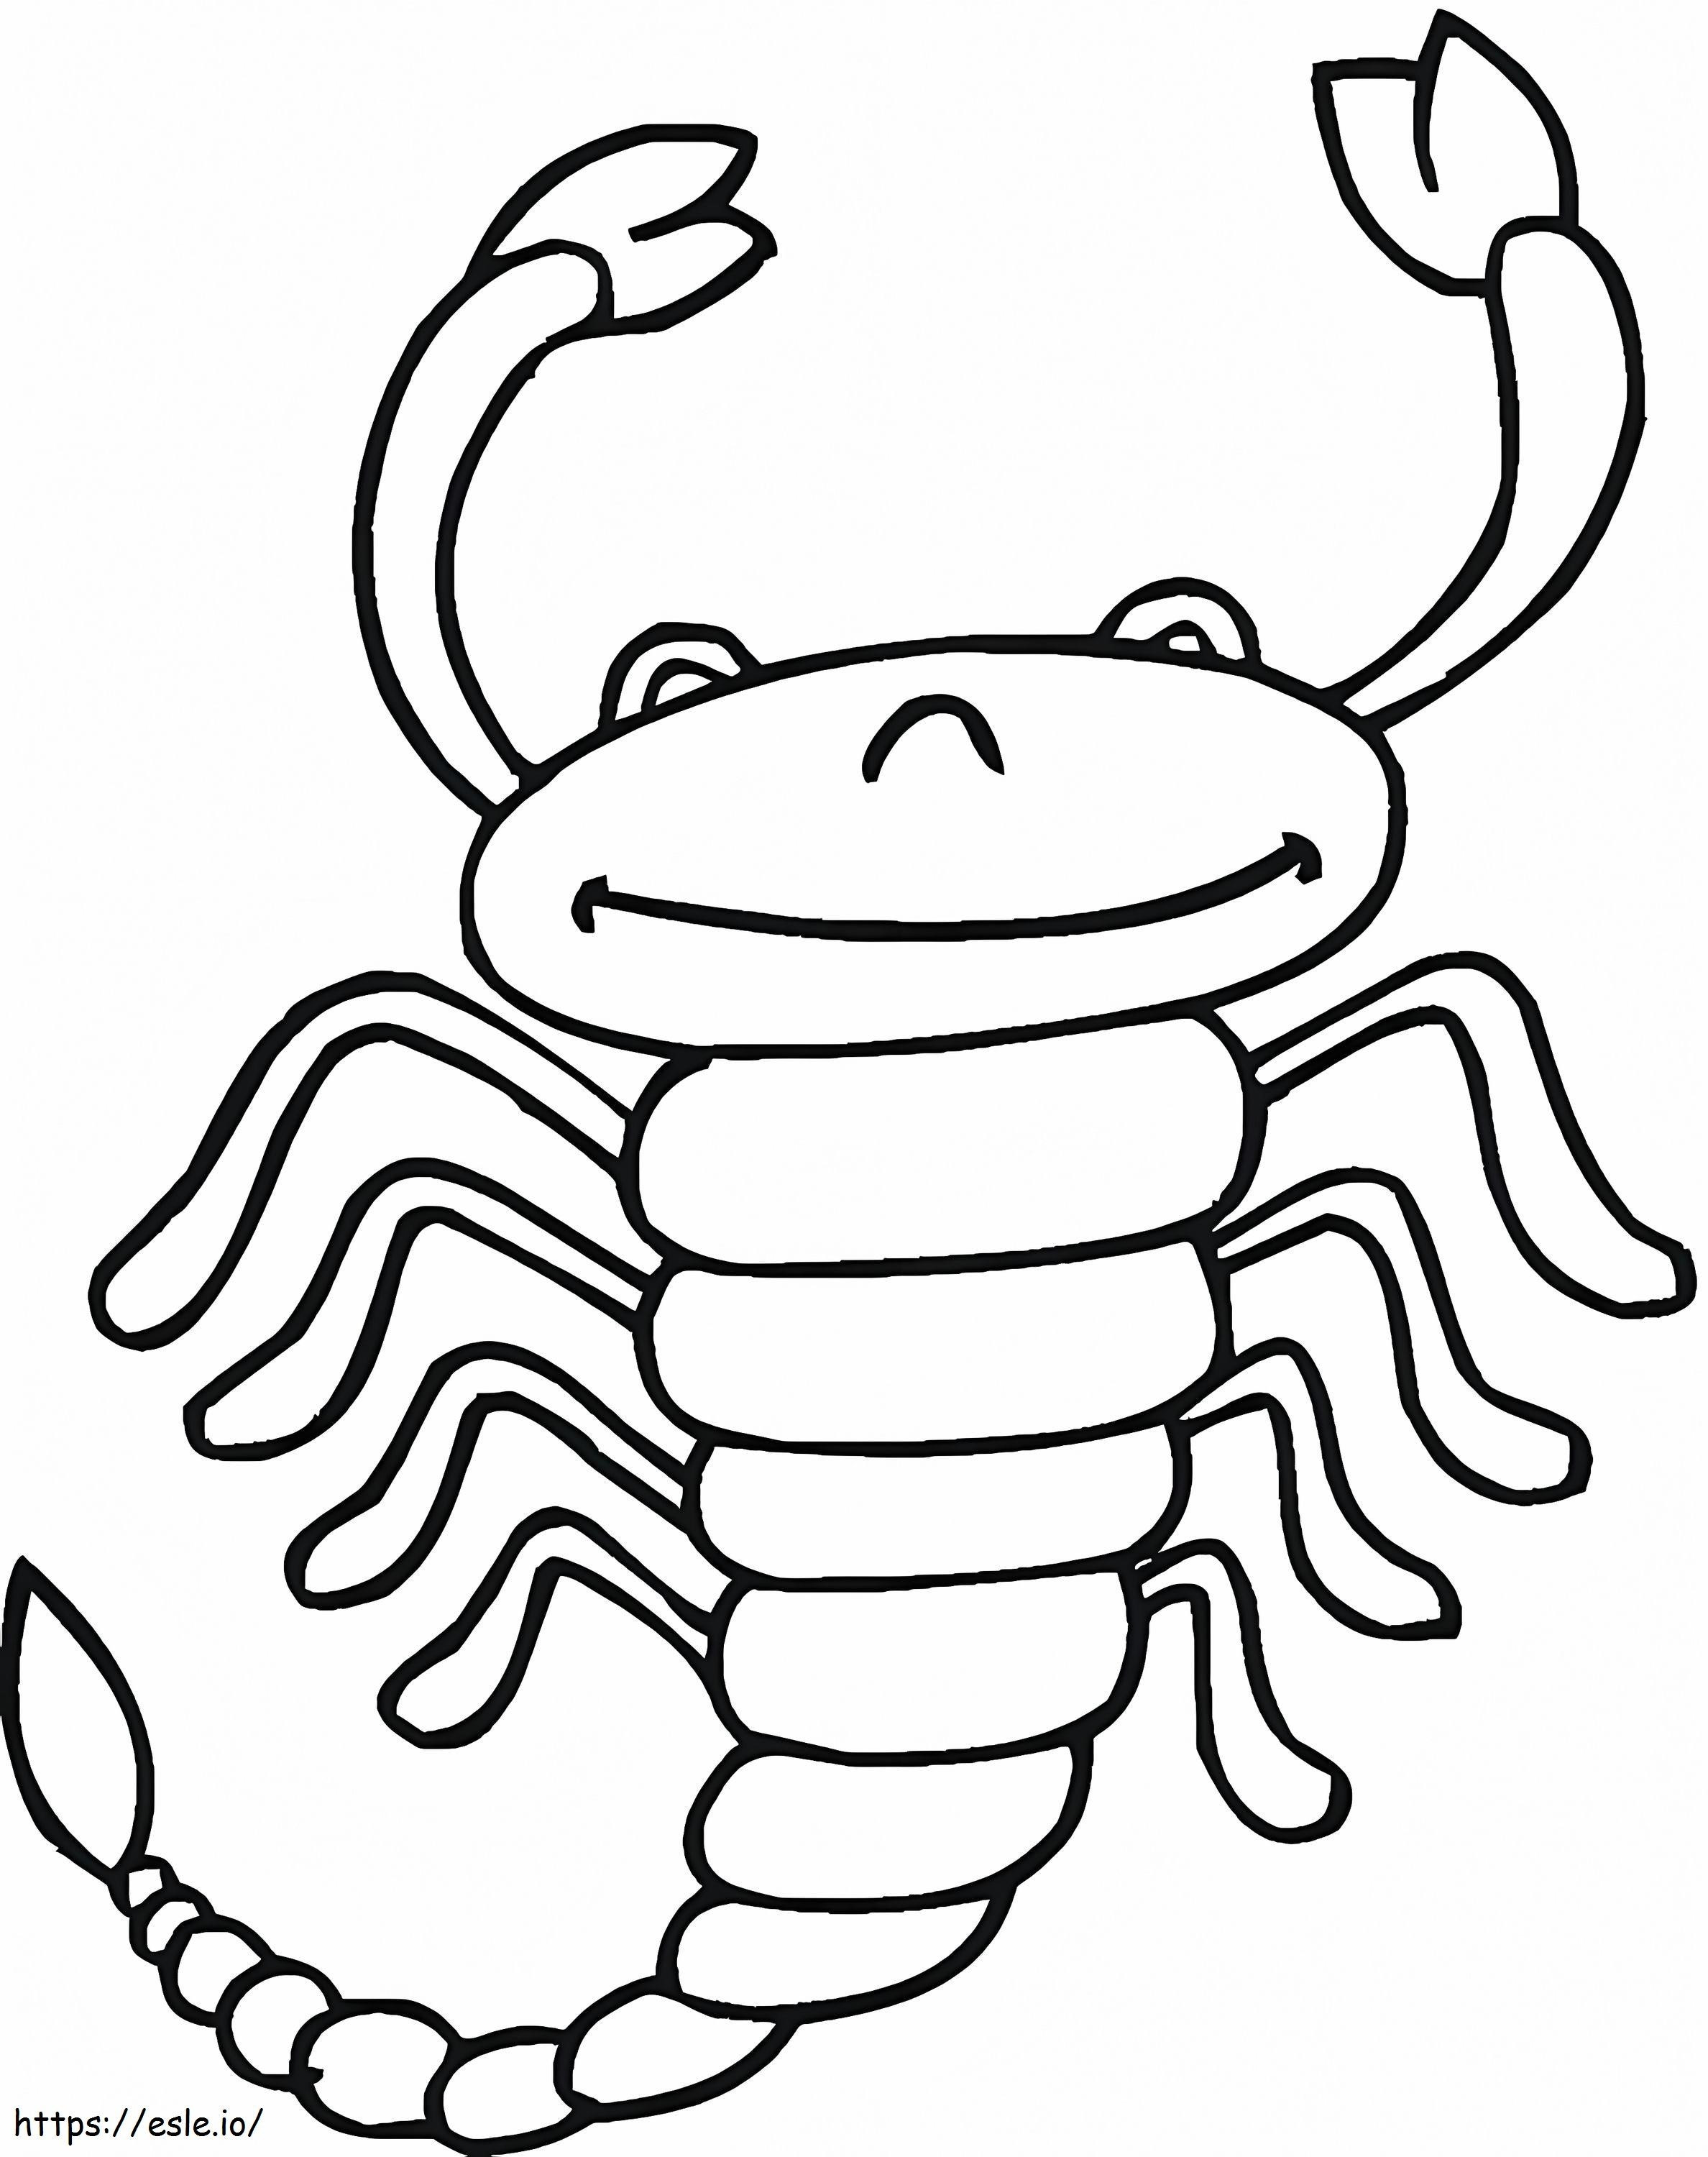 Lustiger Skorpion ausmalbilder